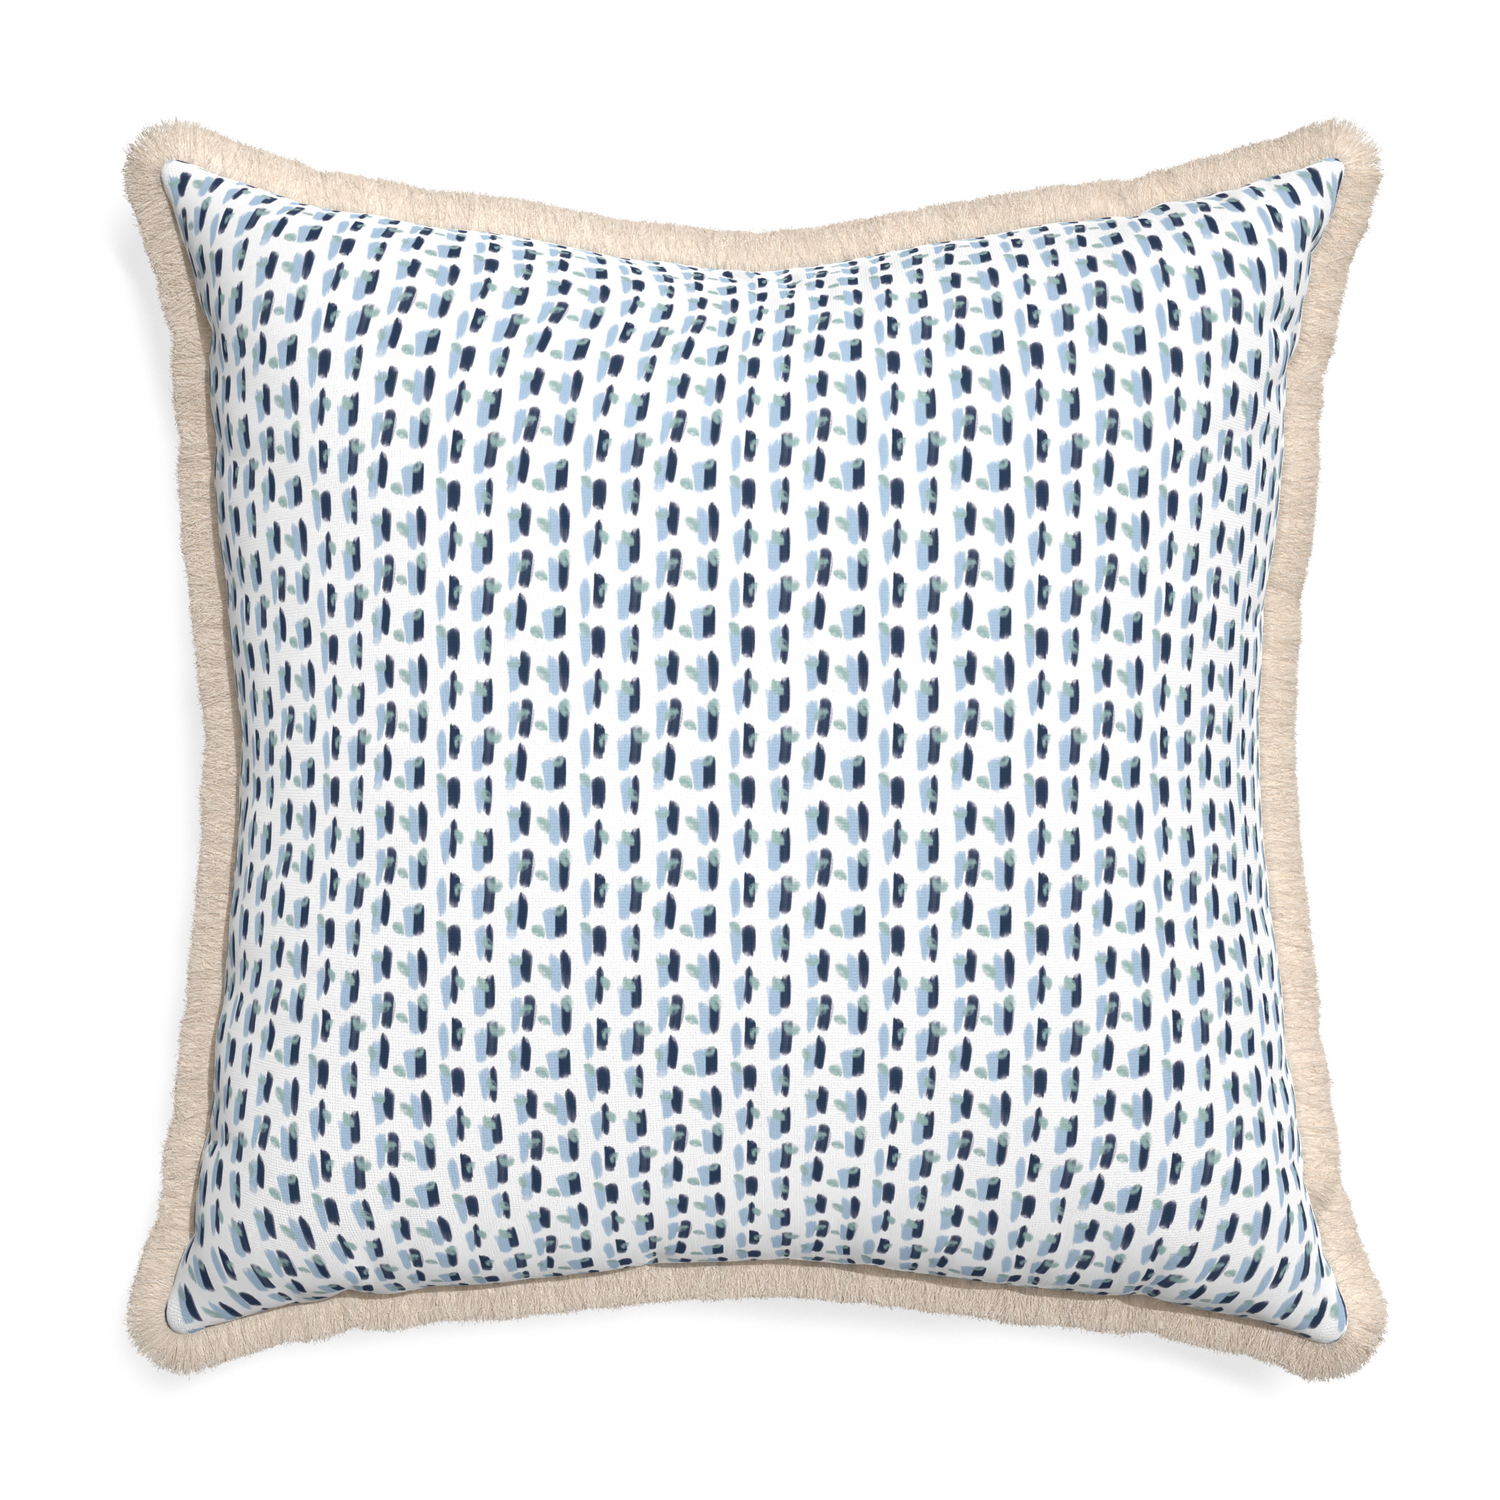 Euro-sham poppy blue custom pillow with cream fringe on white background